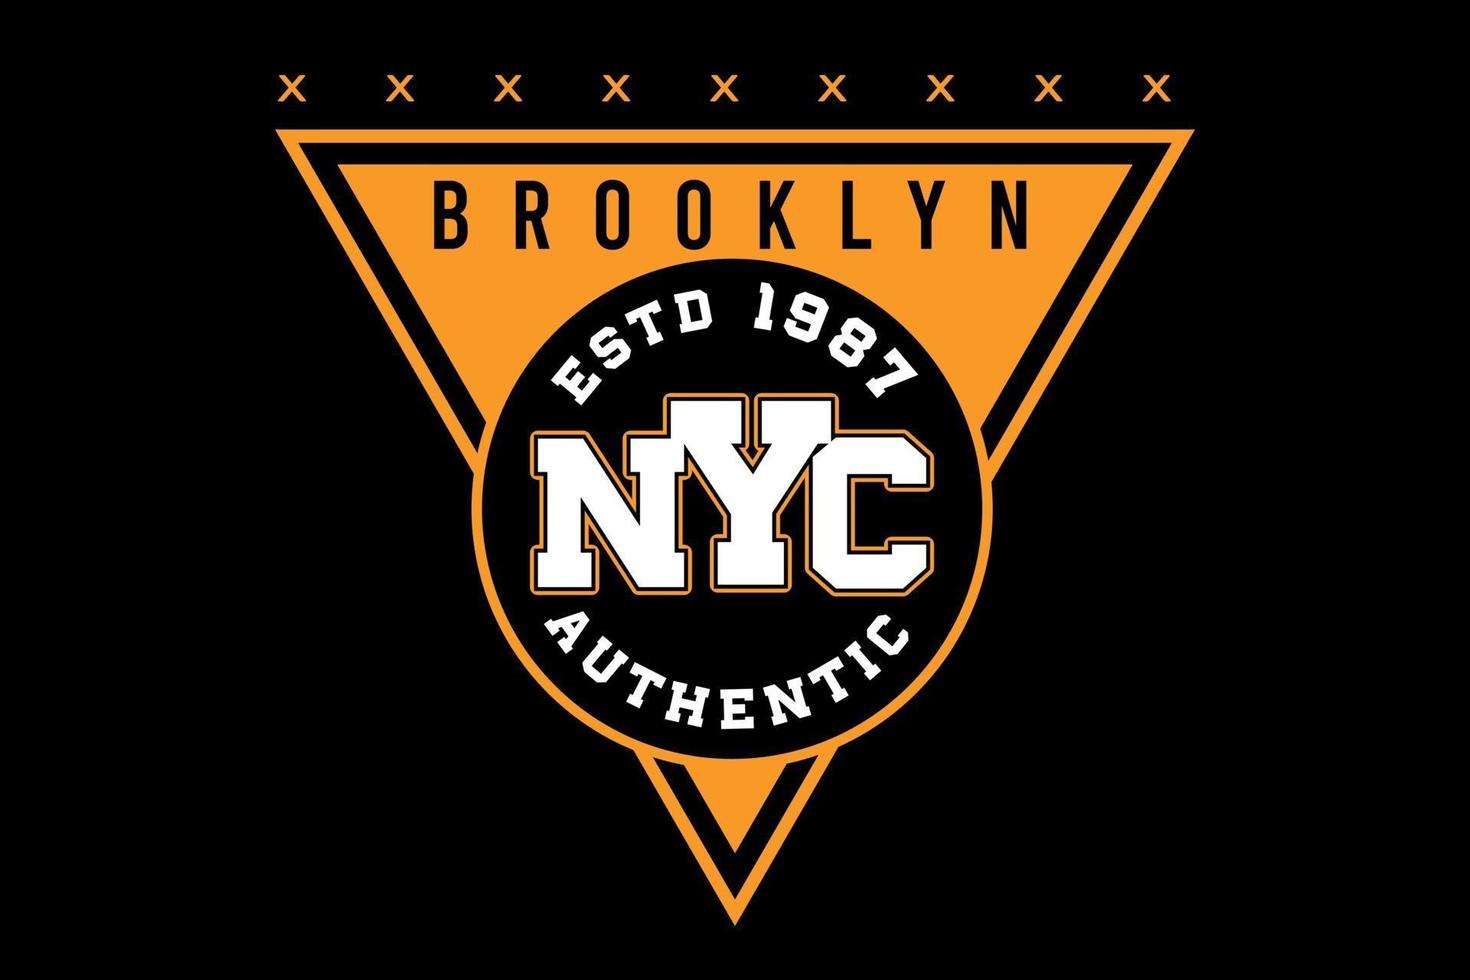 Brooklyn New York City Typografie Mockup Design vektor